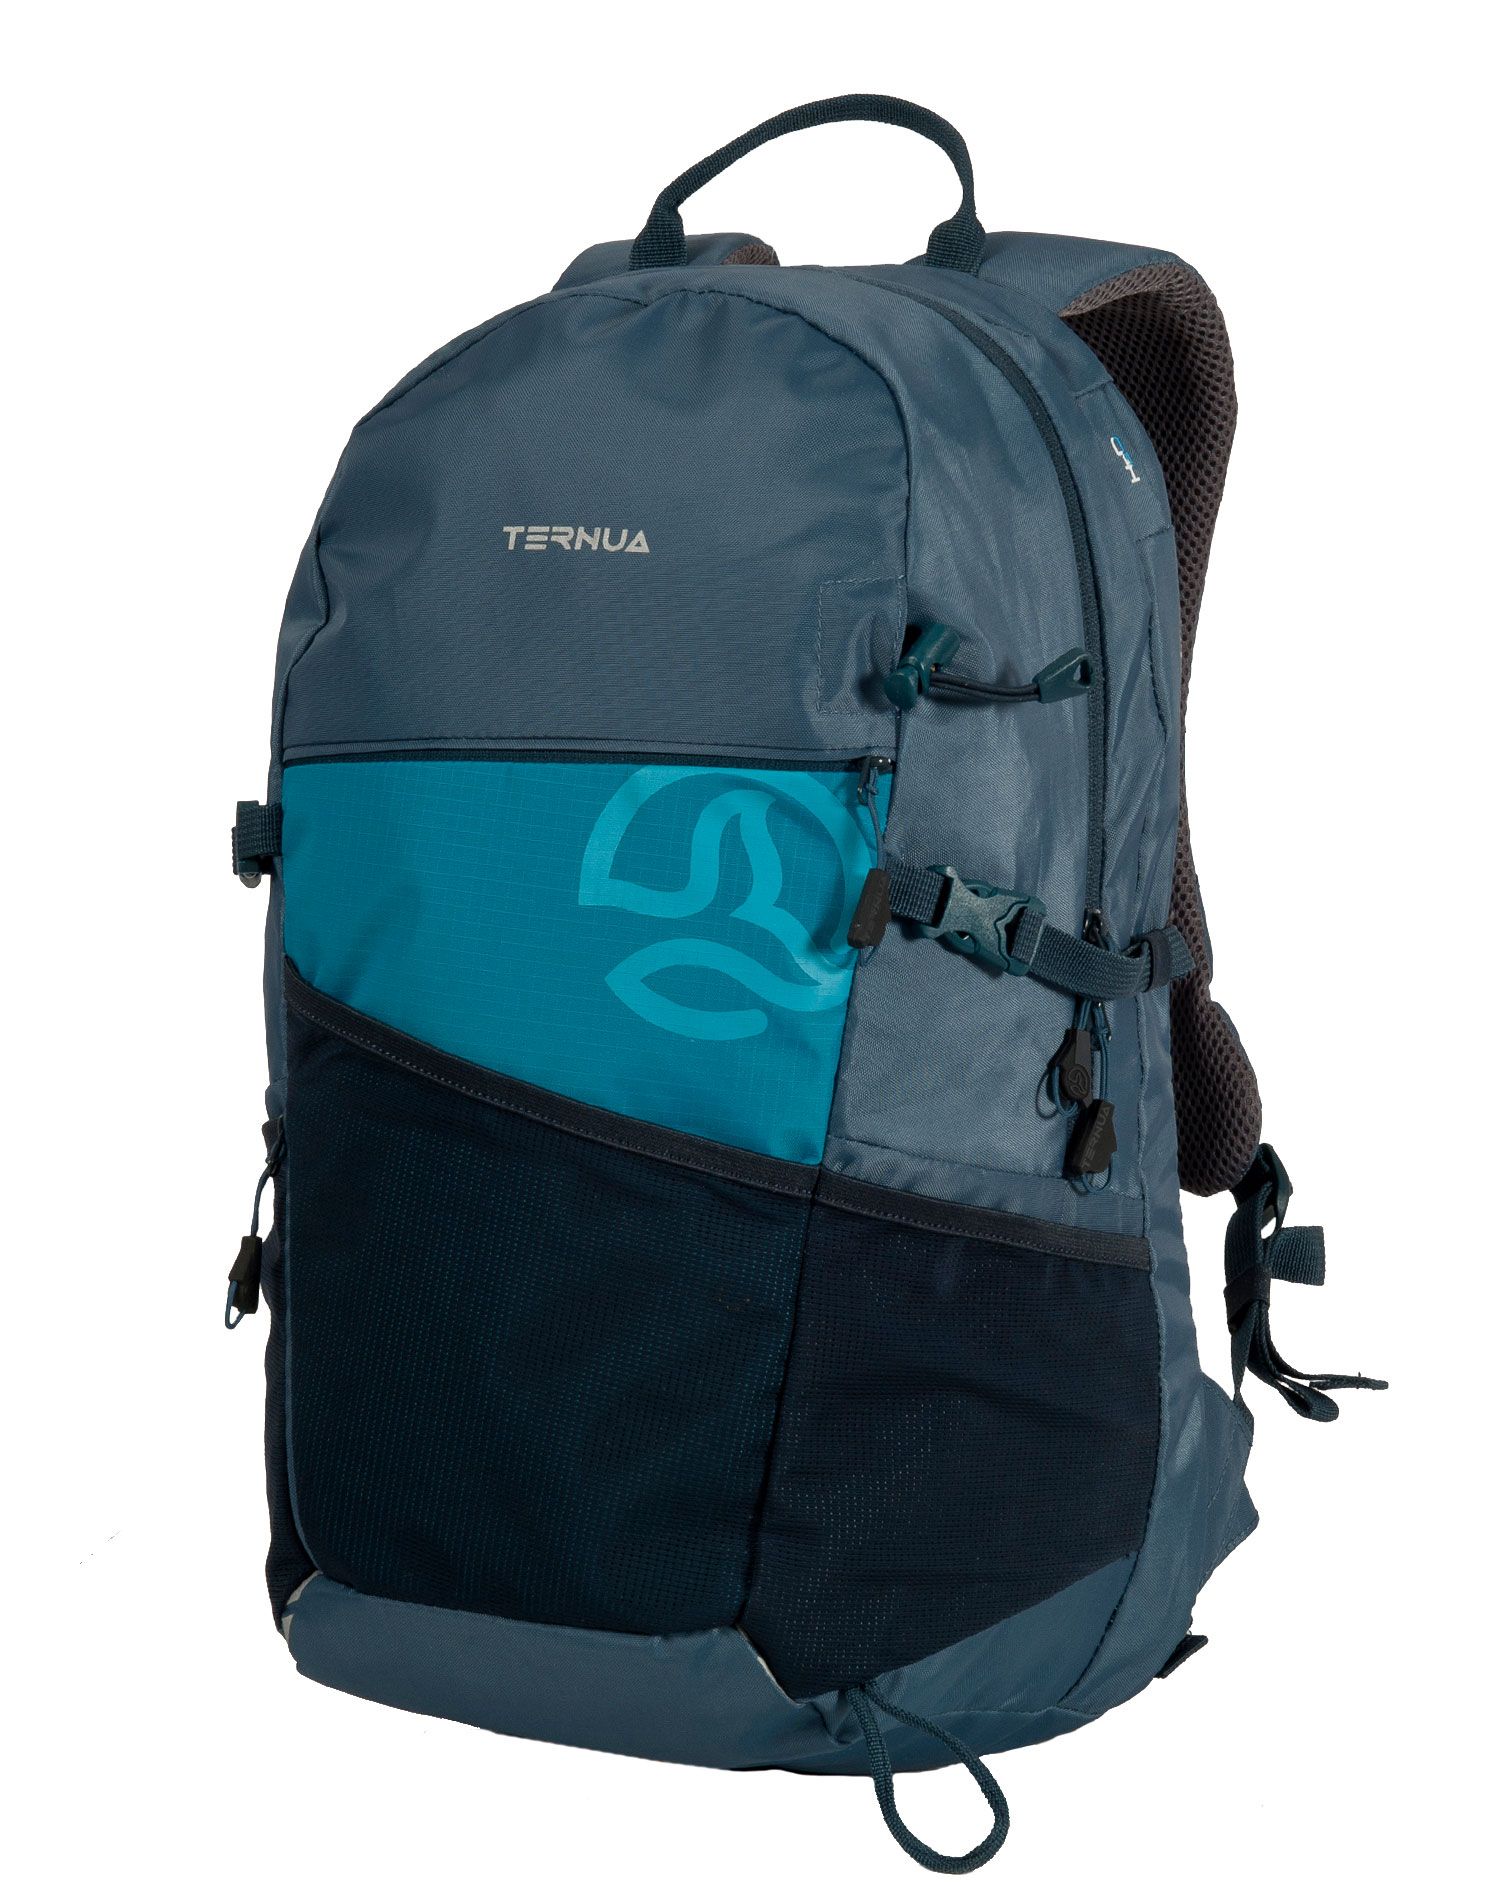 Рюкзак мужской Ternua Sbt 25L, серый / синий